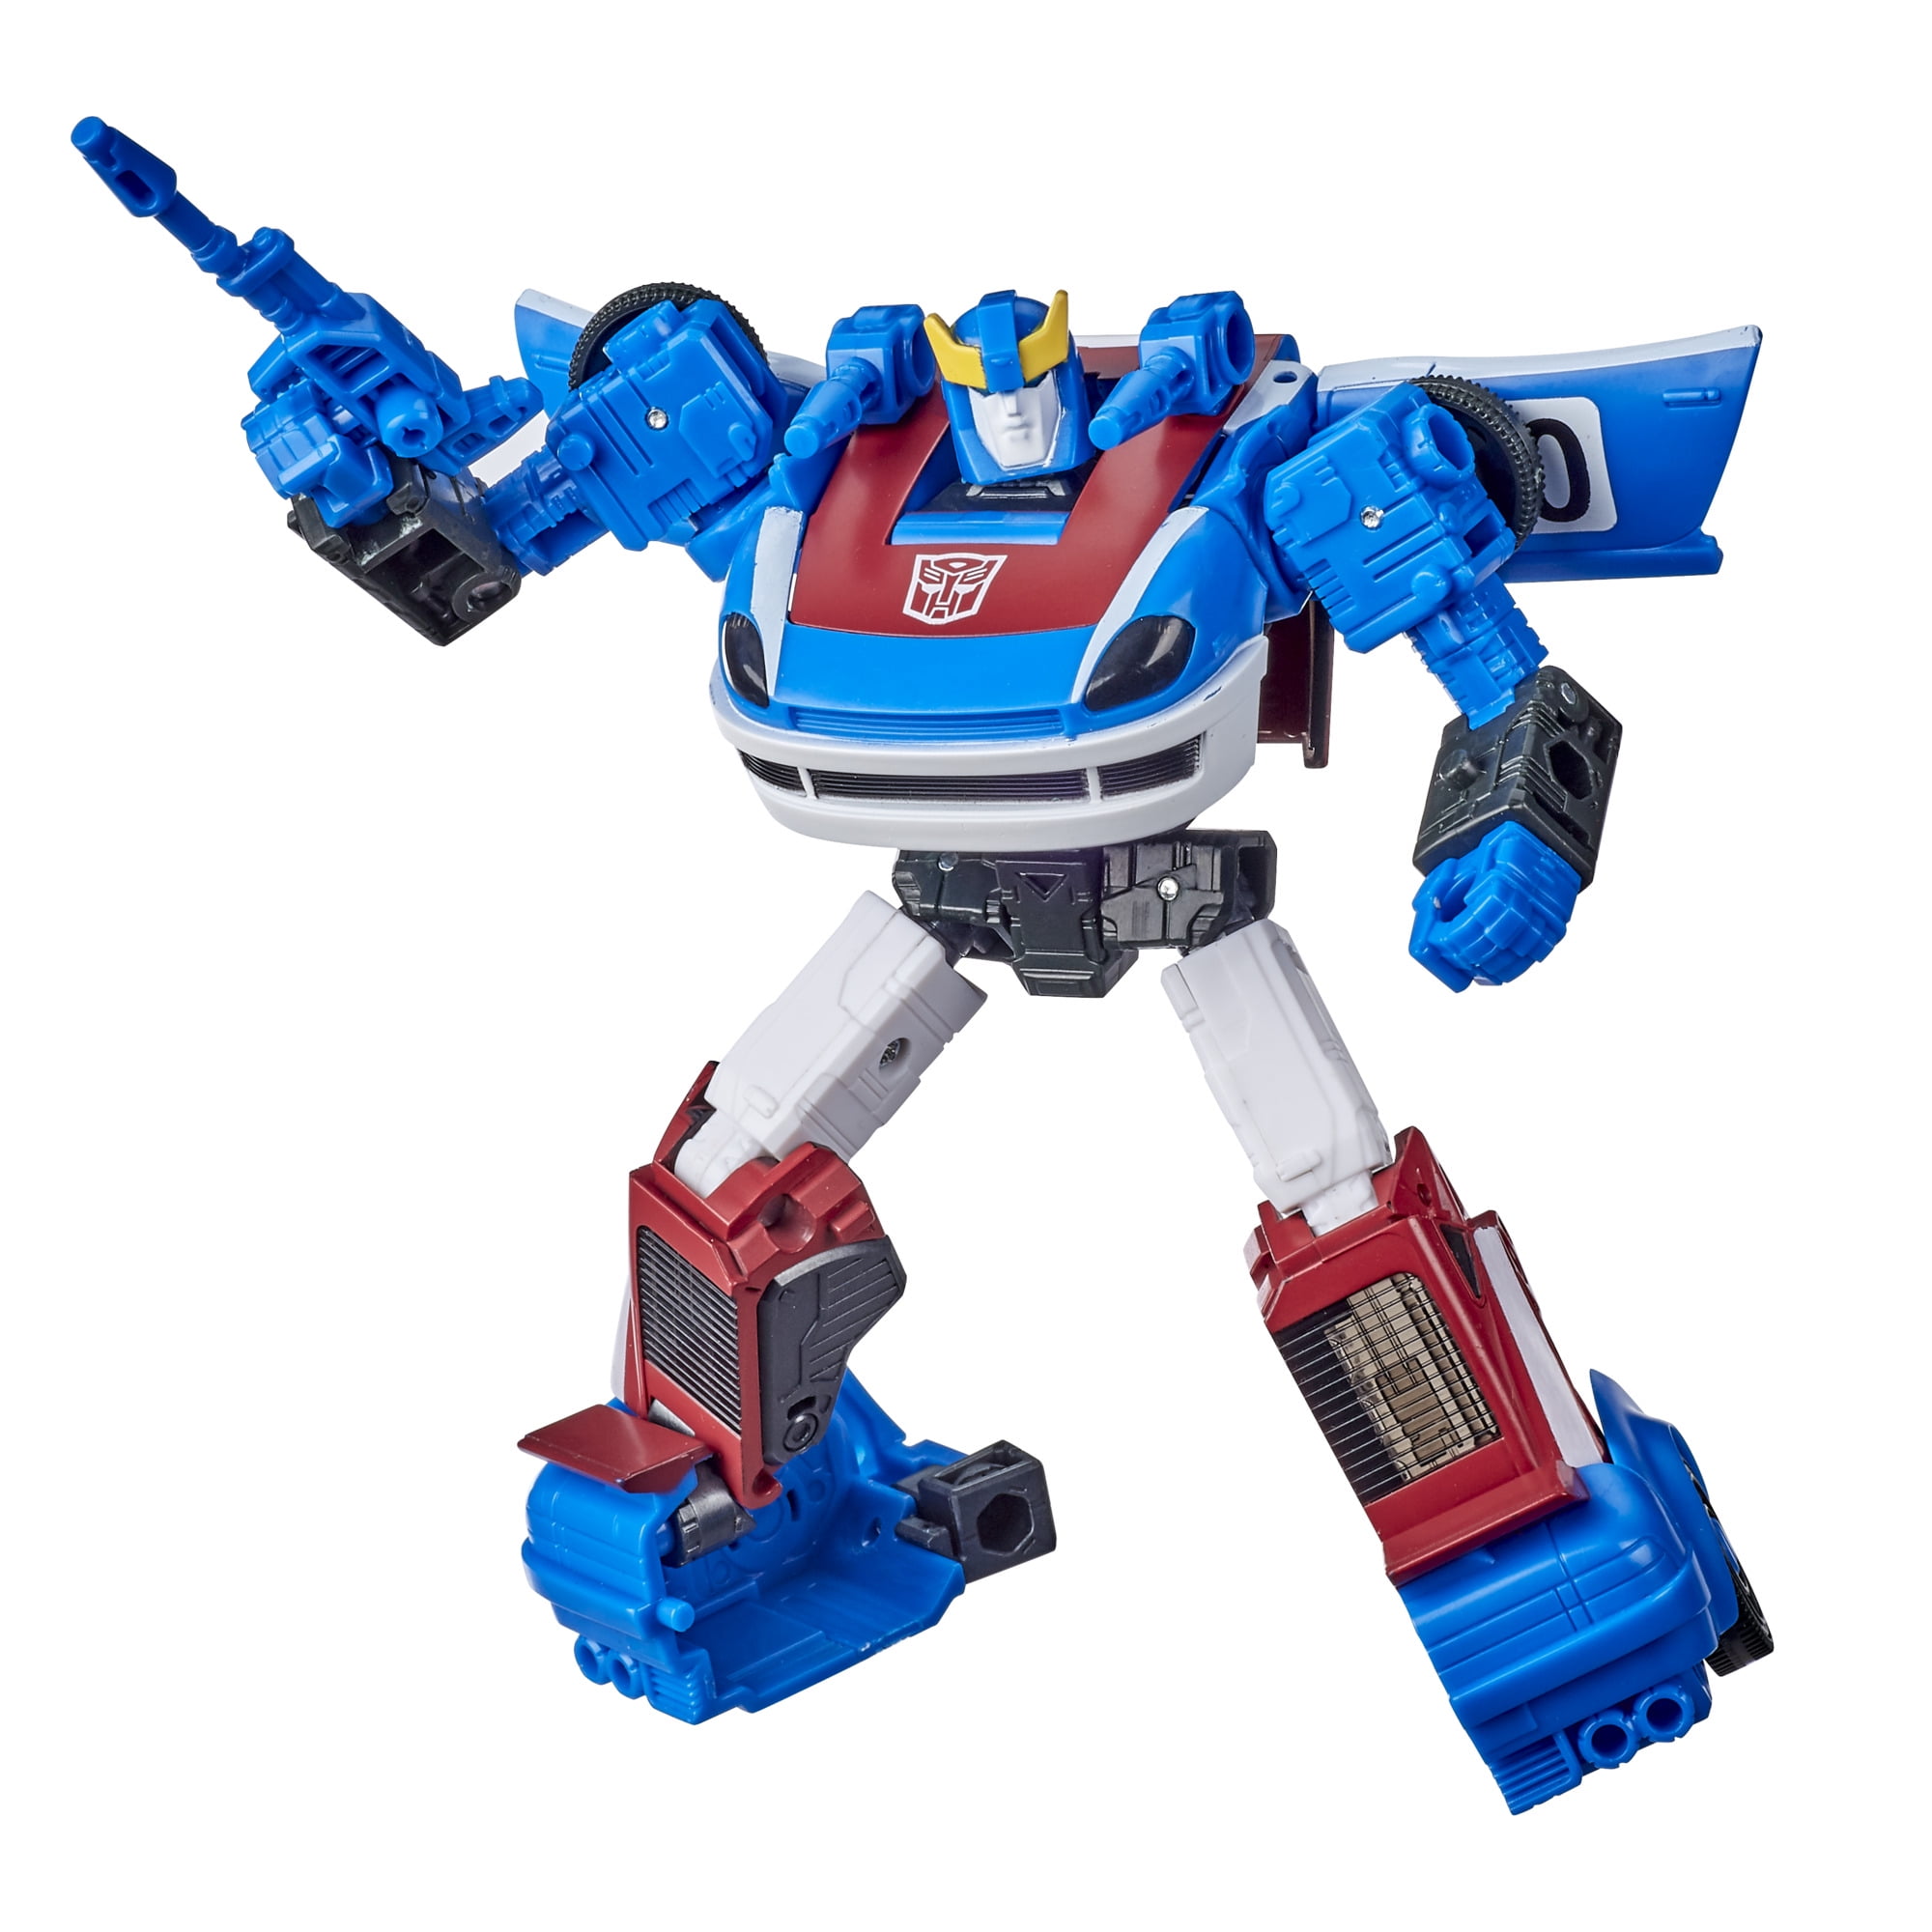 Hasbro Transformers Revenge of the Fallen Deluxe Class Smokescreen Action Figure for sale online 